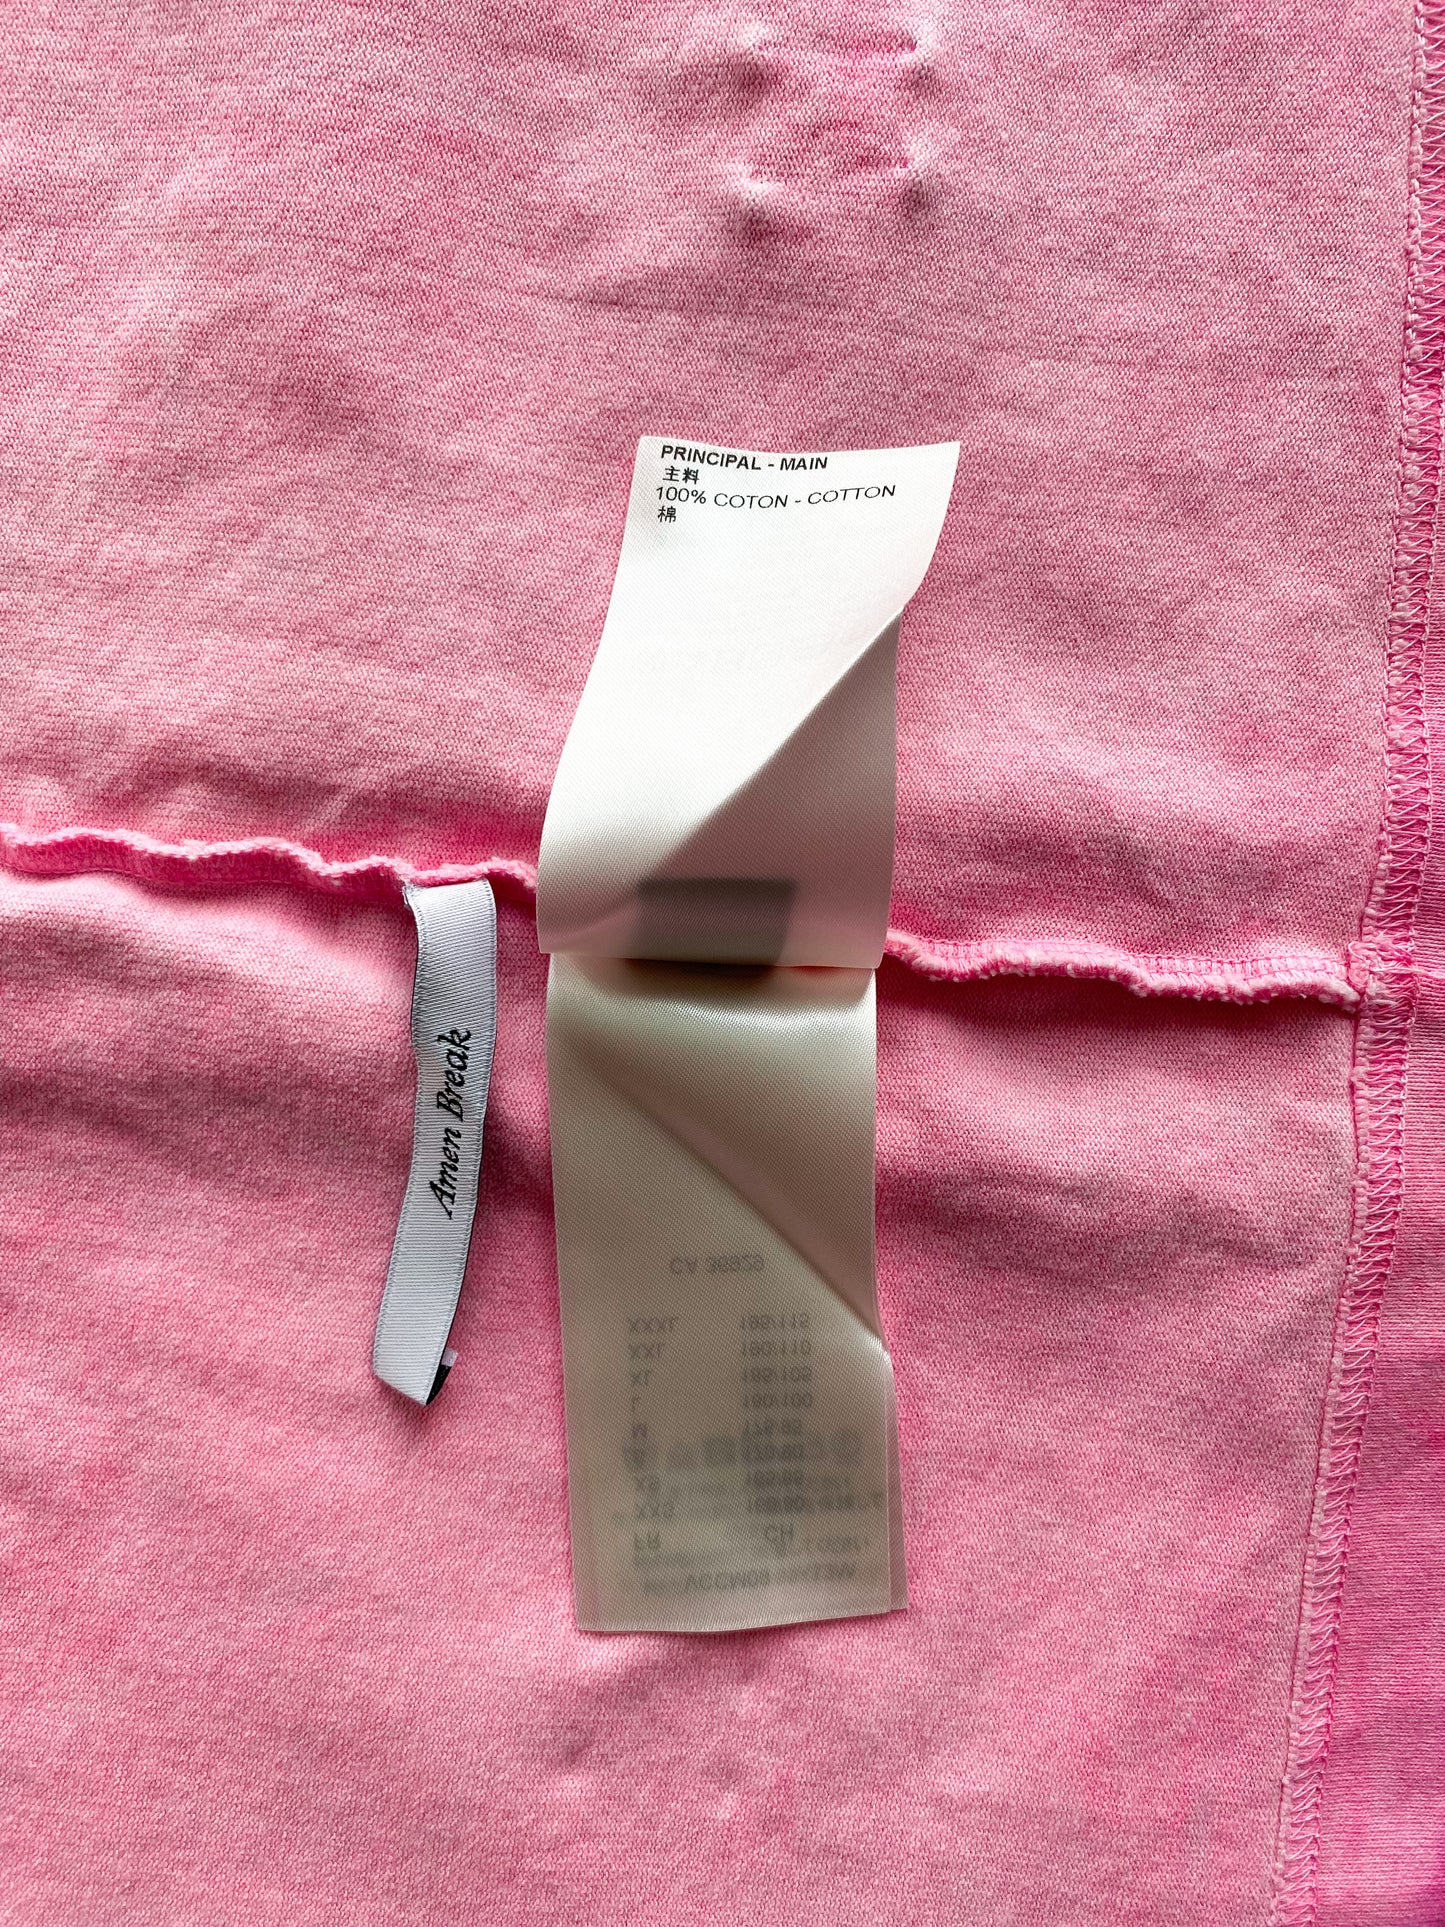 Louis Vuitton Pink Tie-Dye Logo Tee – Savonches